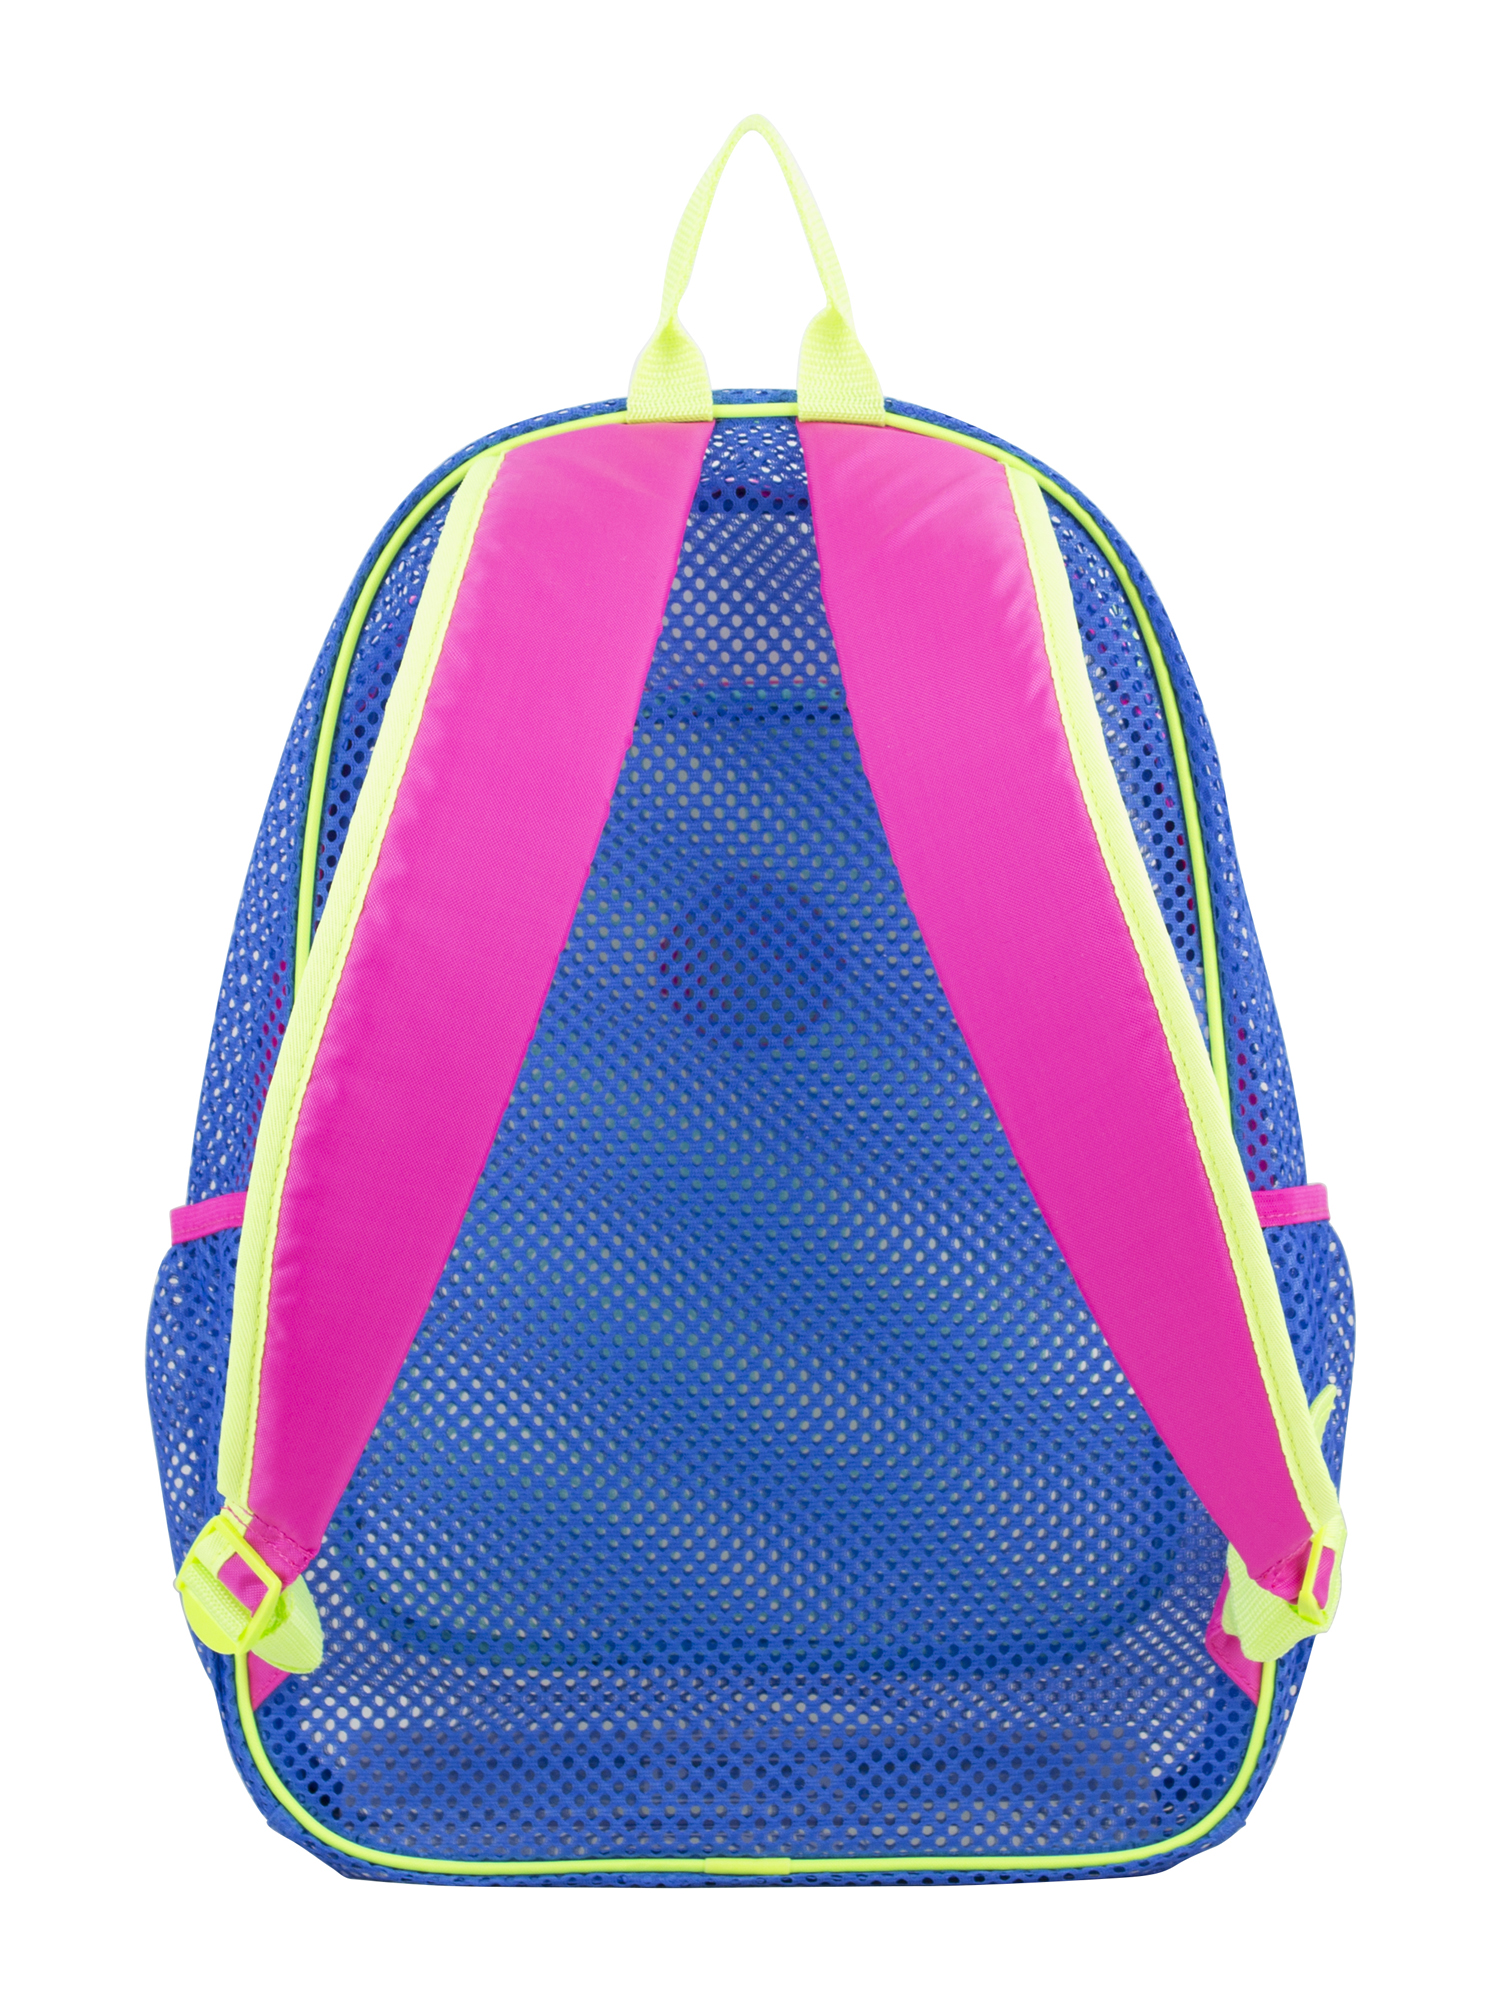 Eastsport Multi-Purpose Mesh Dynamic Blue Backpack with Adjustable Straps - image 4 of 6